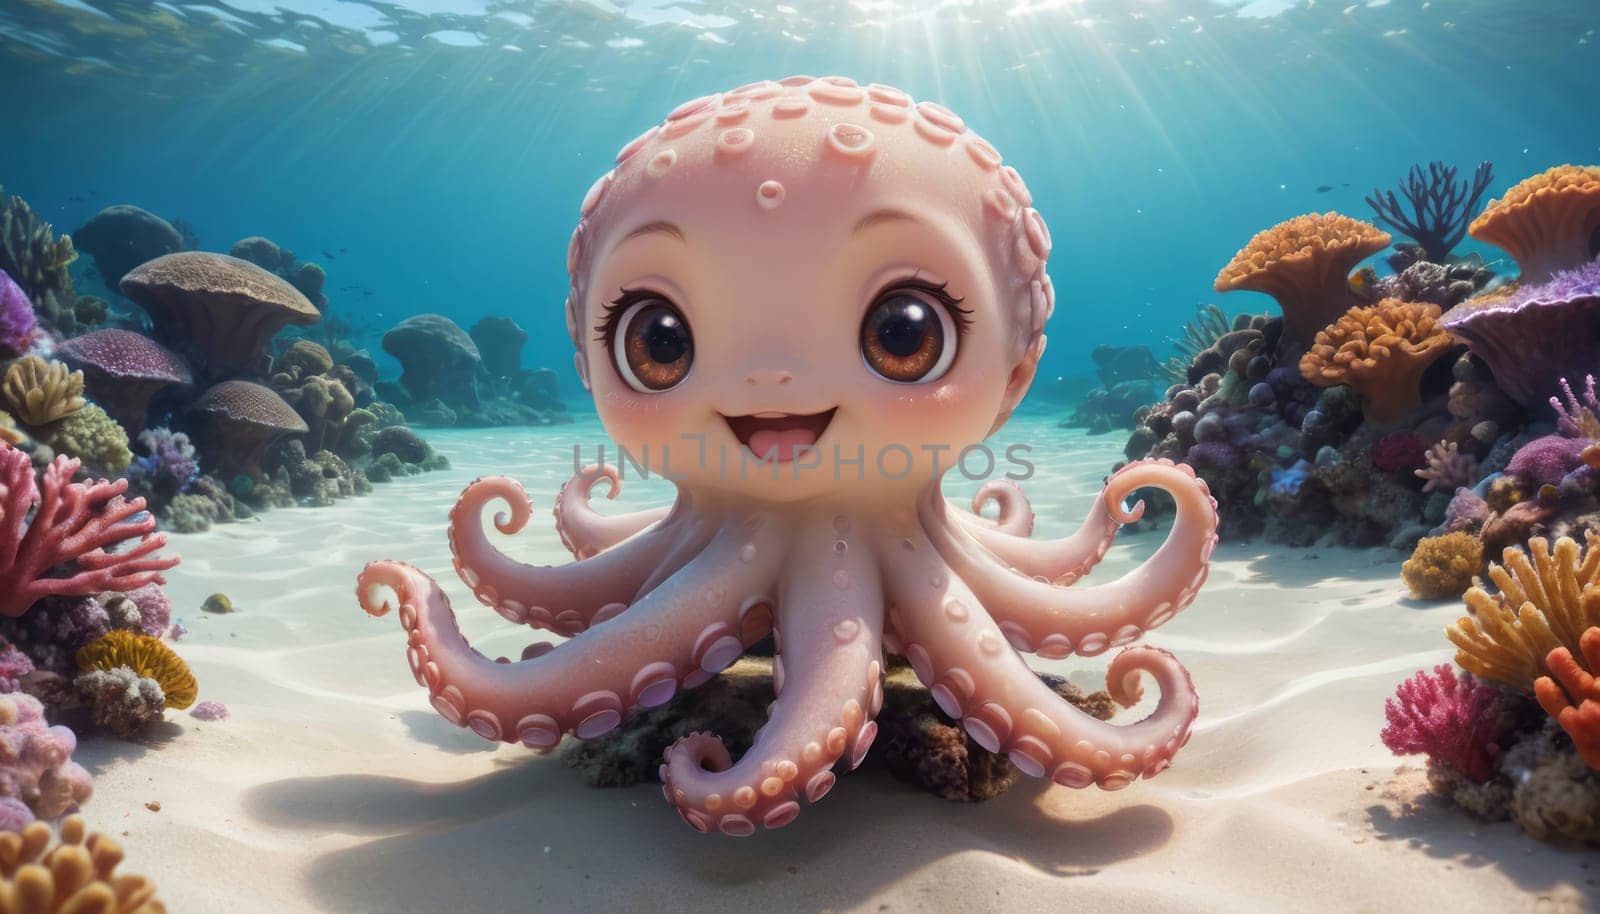 Underwater Scene with Cute Baby Octopus by nkotlyar